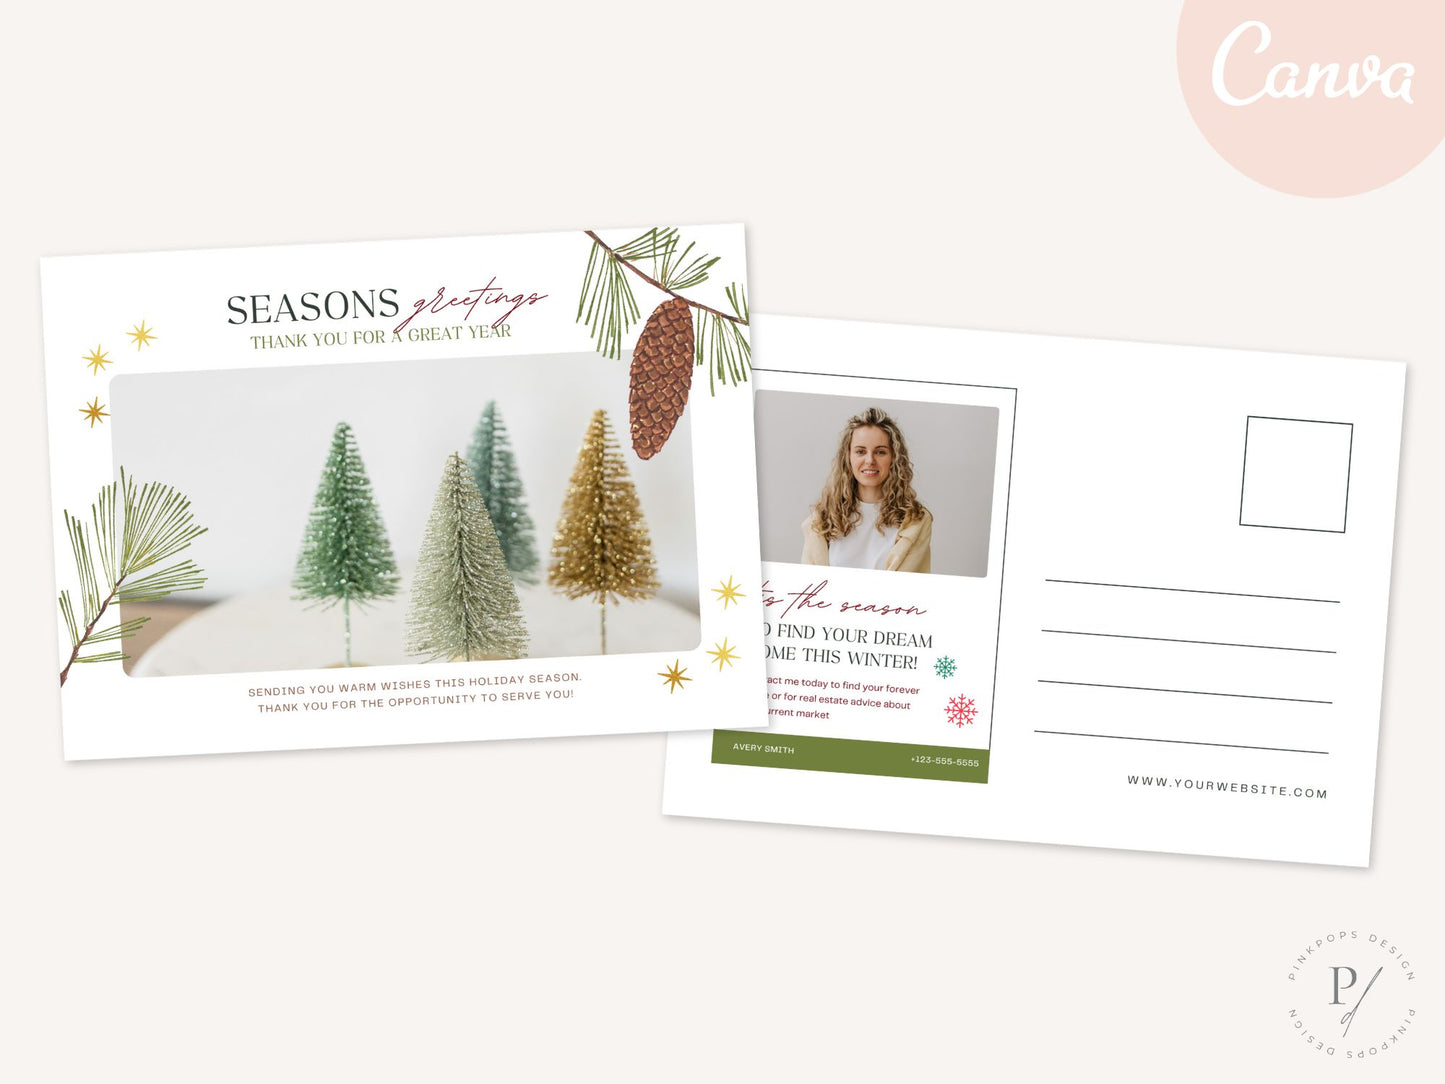 Real Estate Season Greetings Christmas Postcard - Festive Client Communication for the Holiday Season